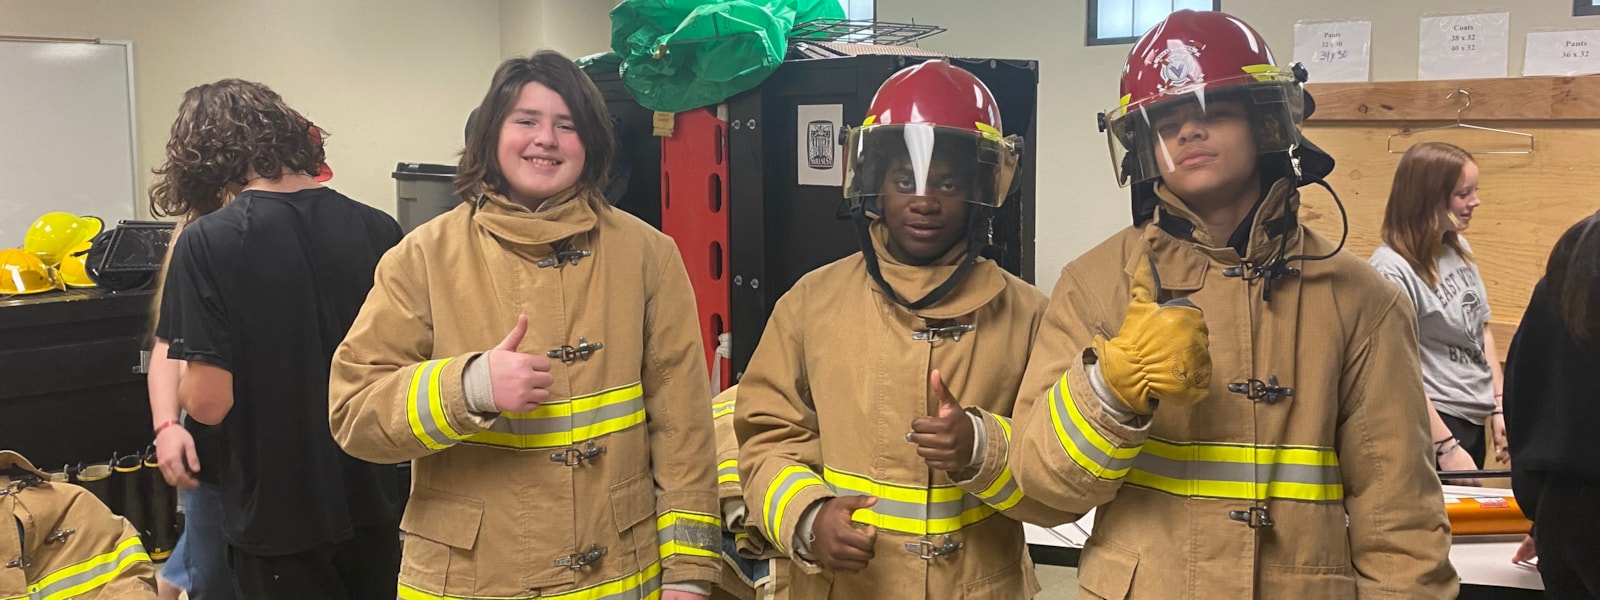 Students visit Fire Science Program at VVHS